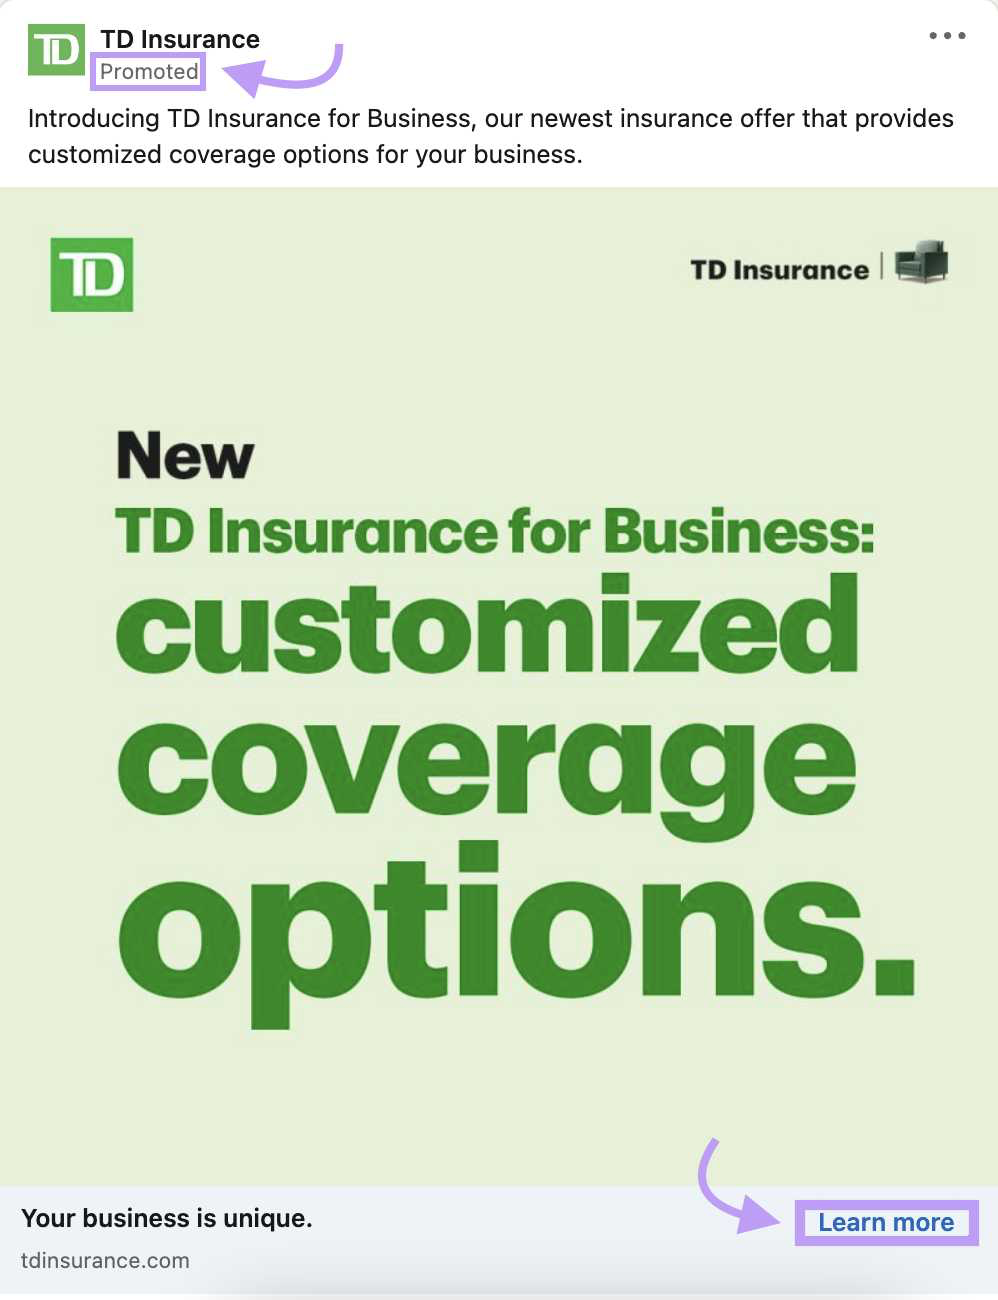 An image ad on LinkedIn by Toronto Dominion (TD)